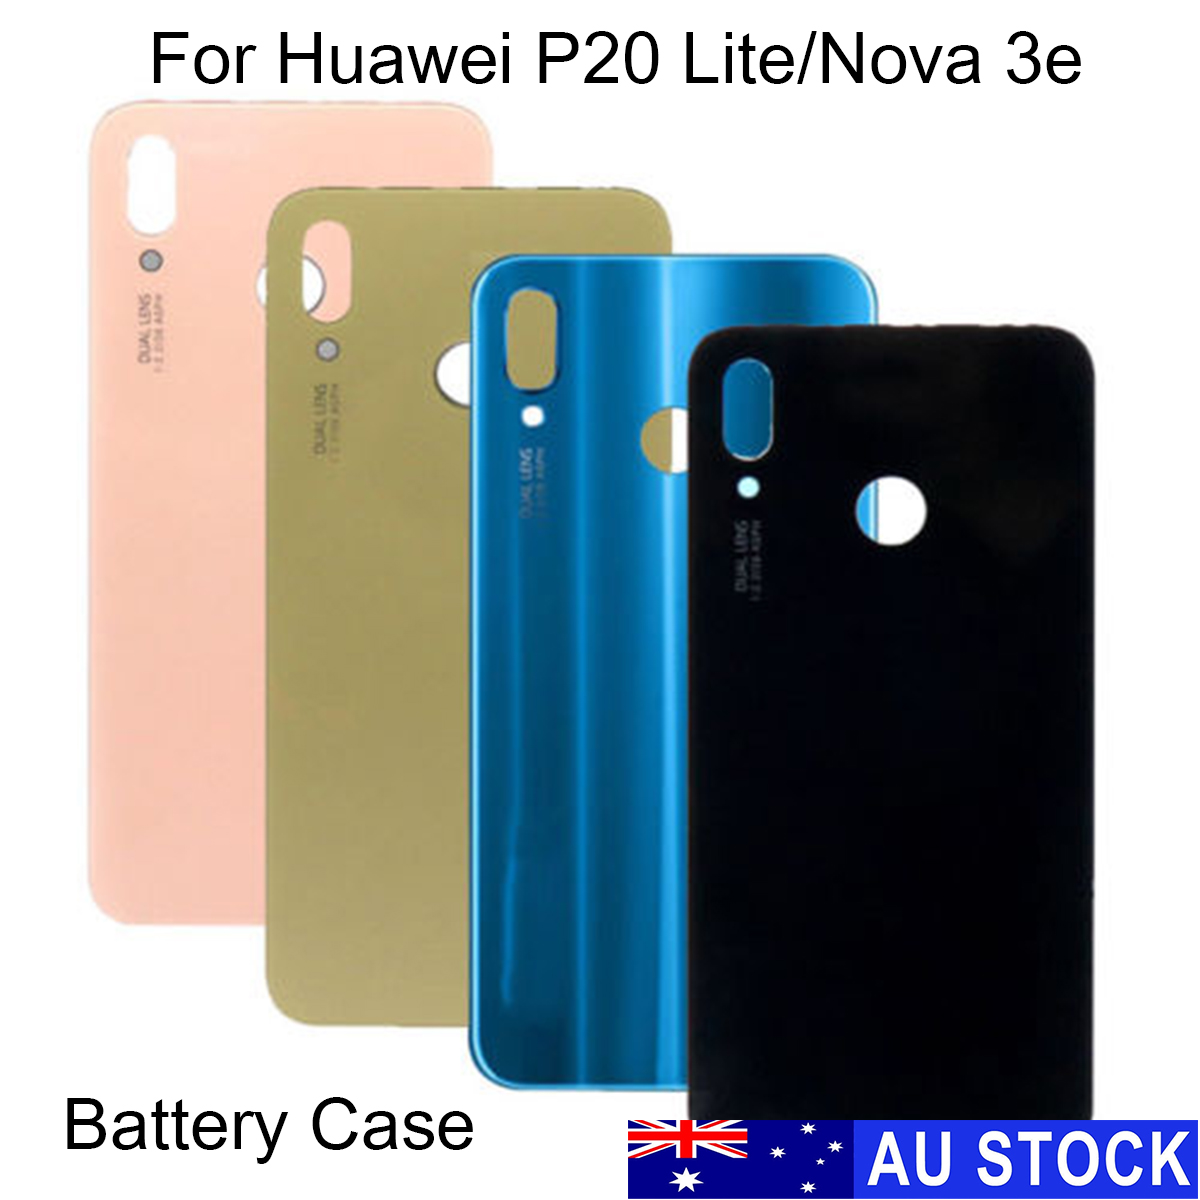 Back-Cover-Repair-Part-Battery-Protective-Case-Shell-For-Huawei-Nova-3e-Huawei-P20-Lite-1308762